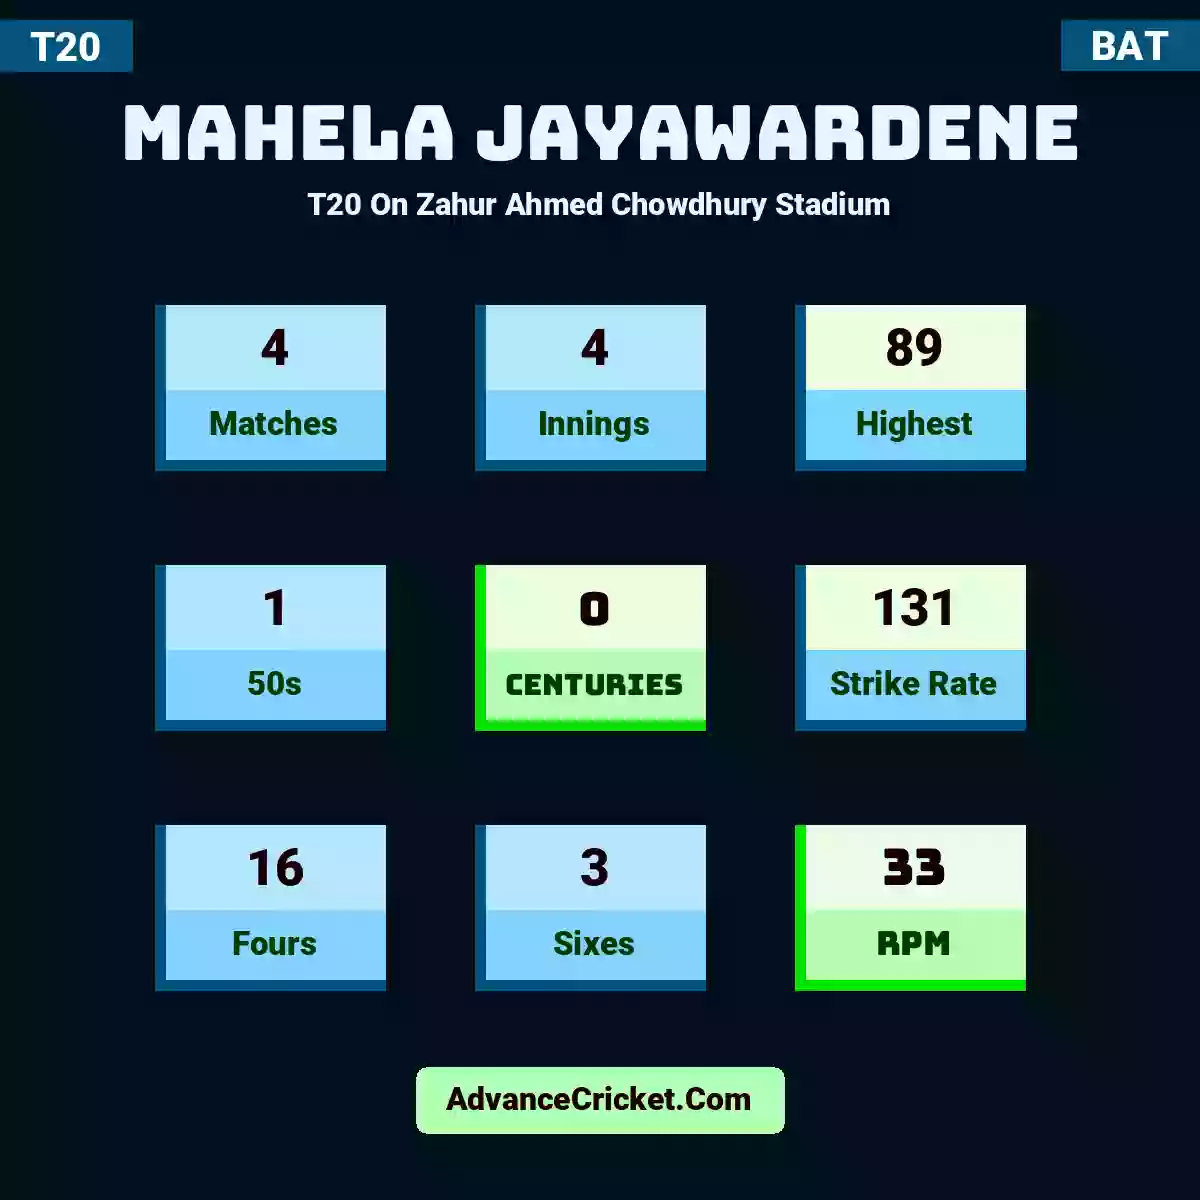 Mahela Jayawardene T20  On Zahur Ahmed Chowdhury Stadium, Mahela Jayawardene played 4 matches, scored 89 runs as highest, 1 half-centuries, and 0 centuries, with a strike rate of 131. M.Jayawardene hit 16 fours and 3 sixes, with an RPM of 33.